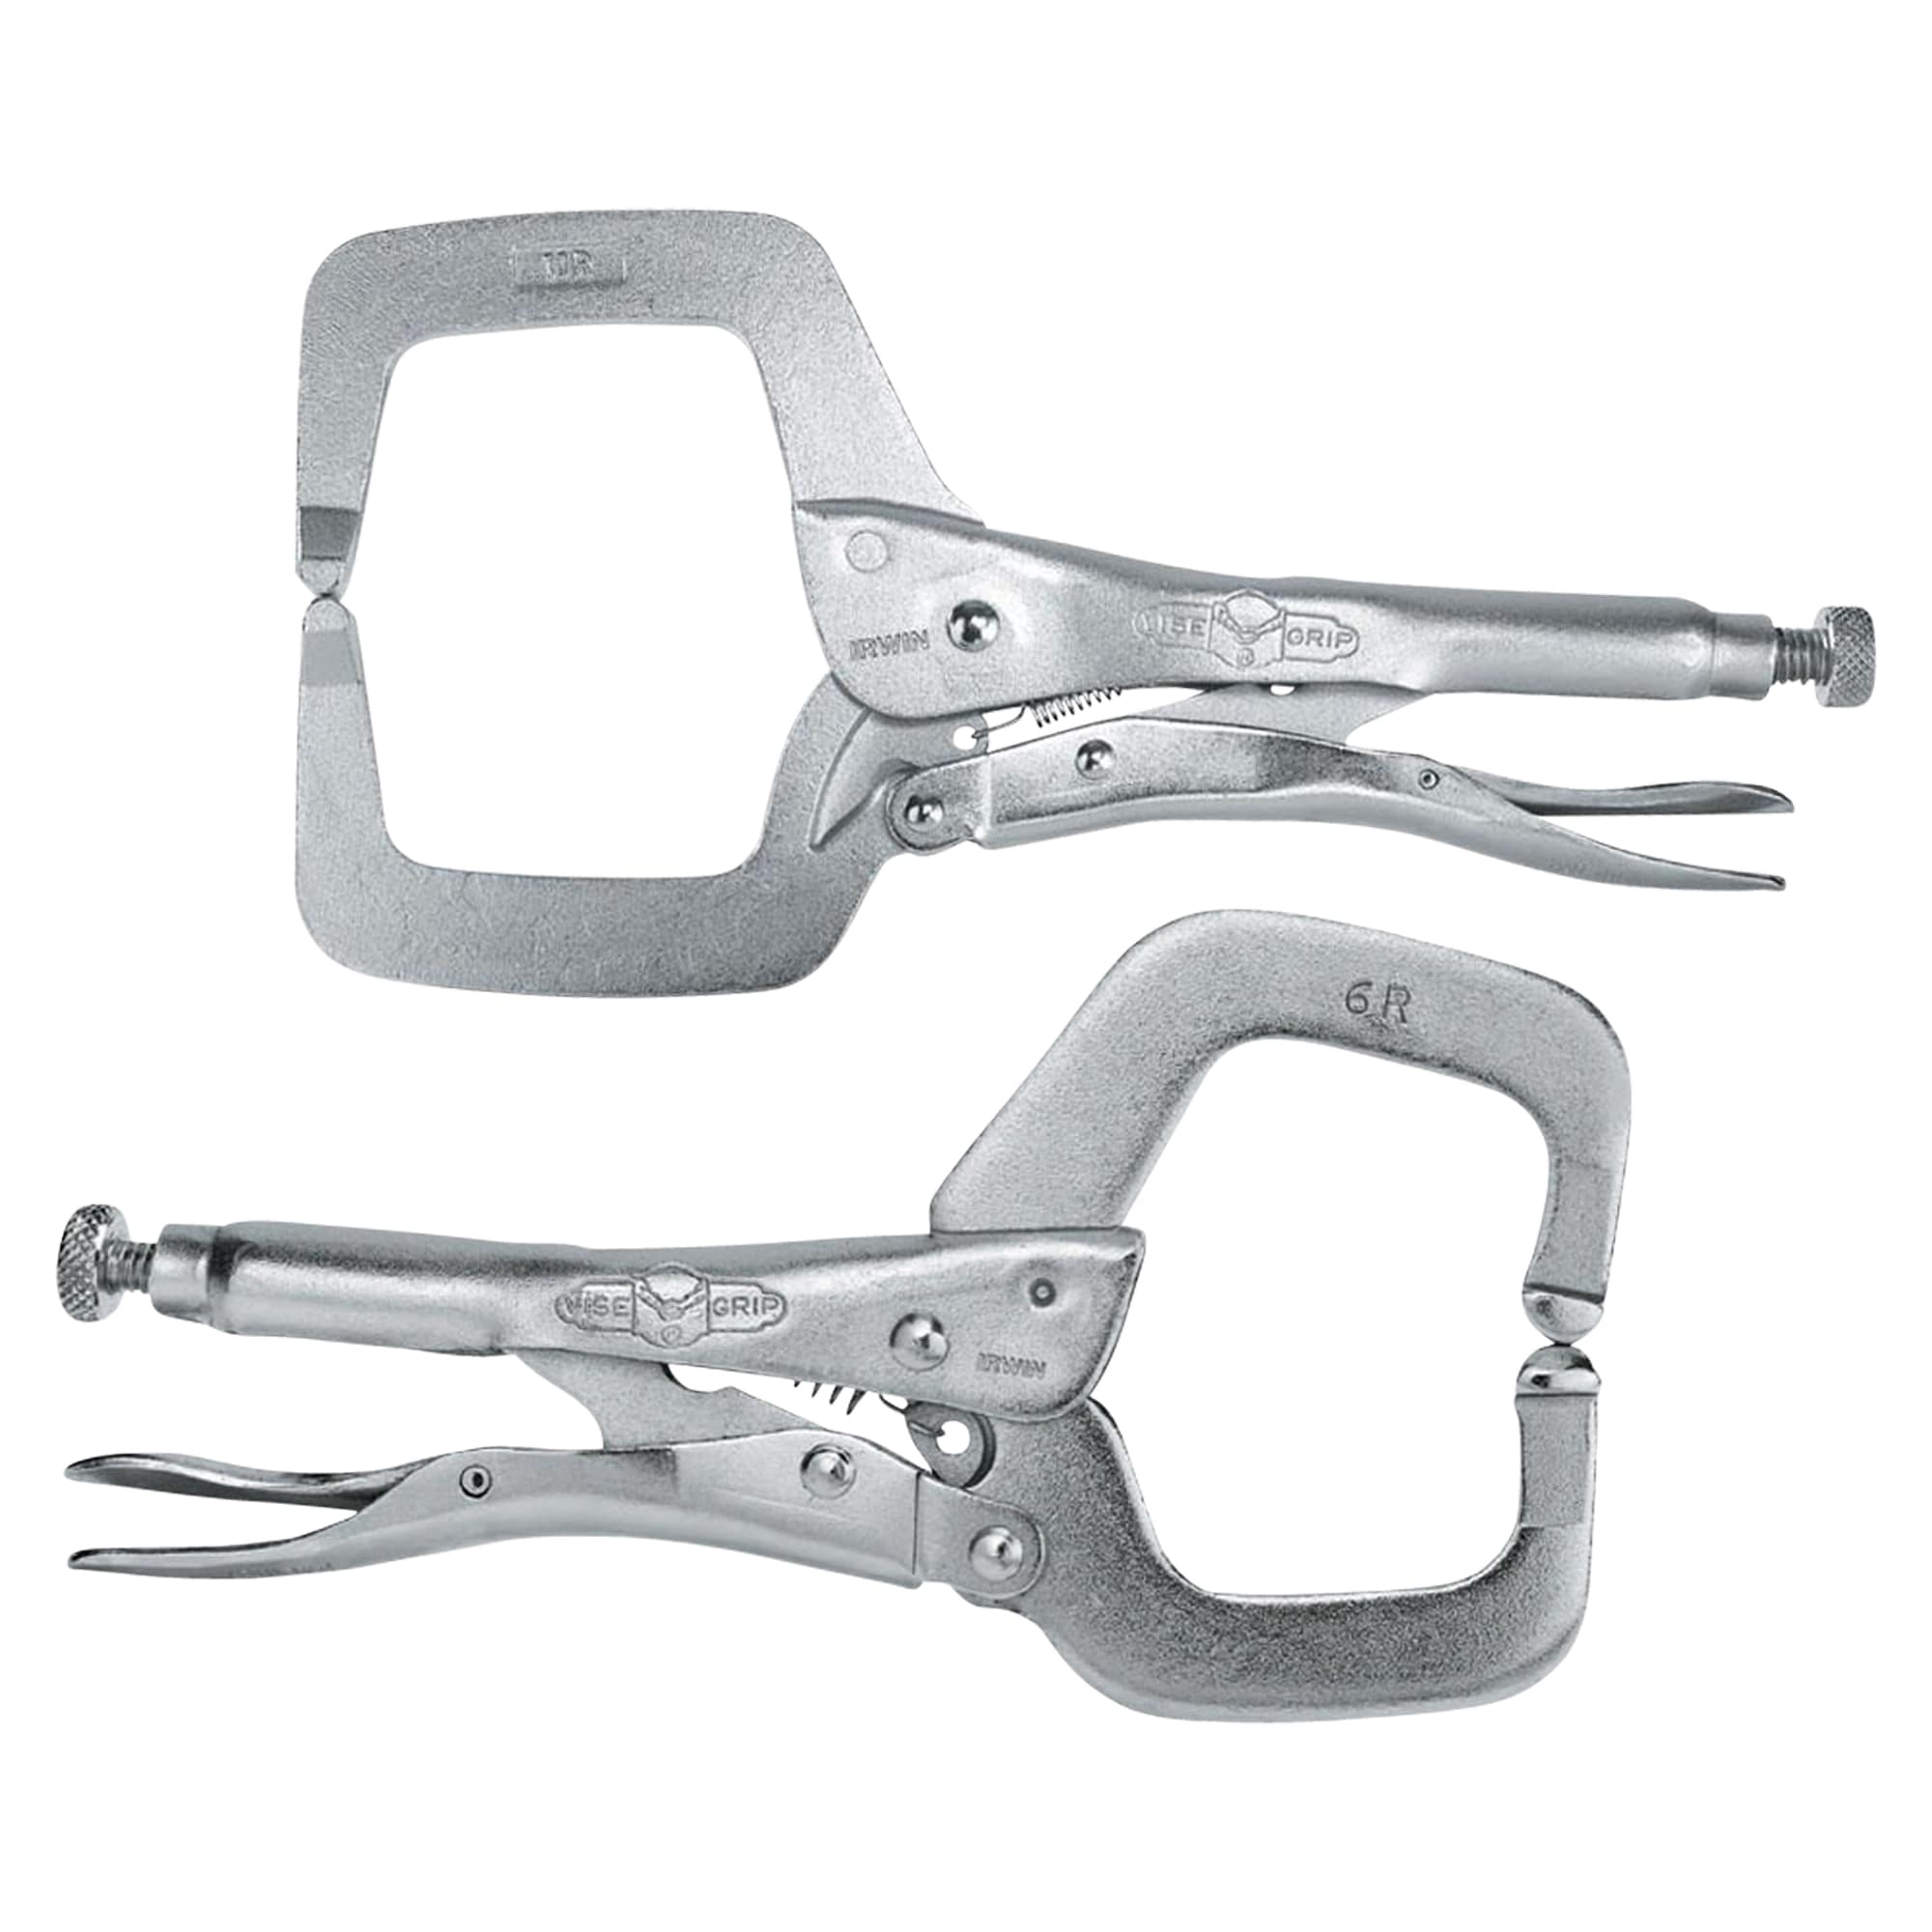 VISE-GRIP 150mm C Clamp Locking Mole Vise Grip Pliers 6" For Welding & Metal Work 